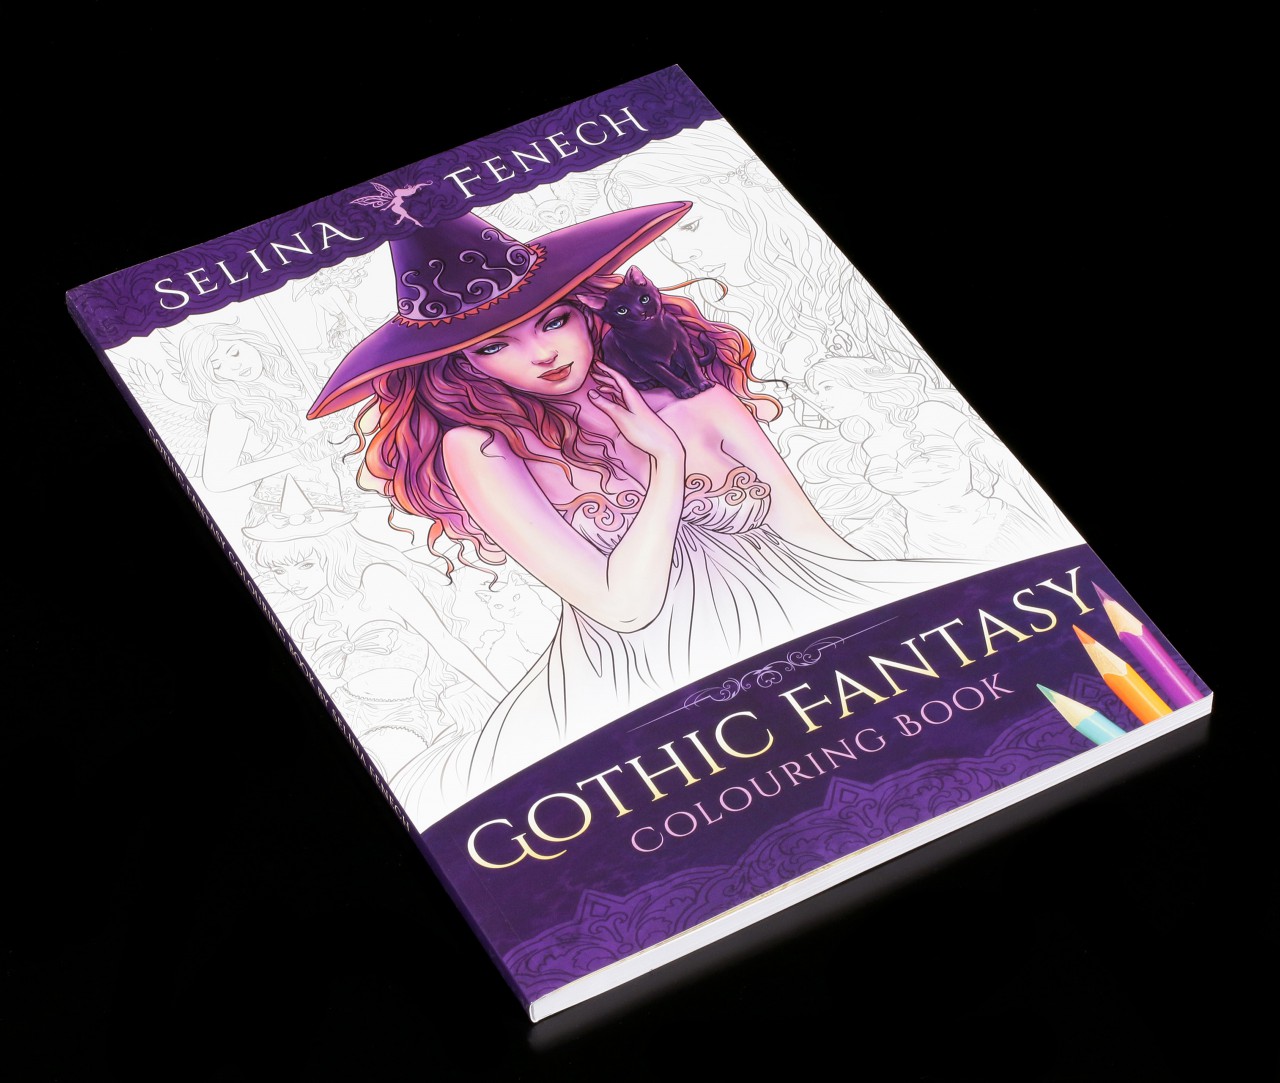 Selina Fenech Colouring Book - Gothic Fantasy